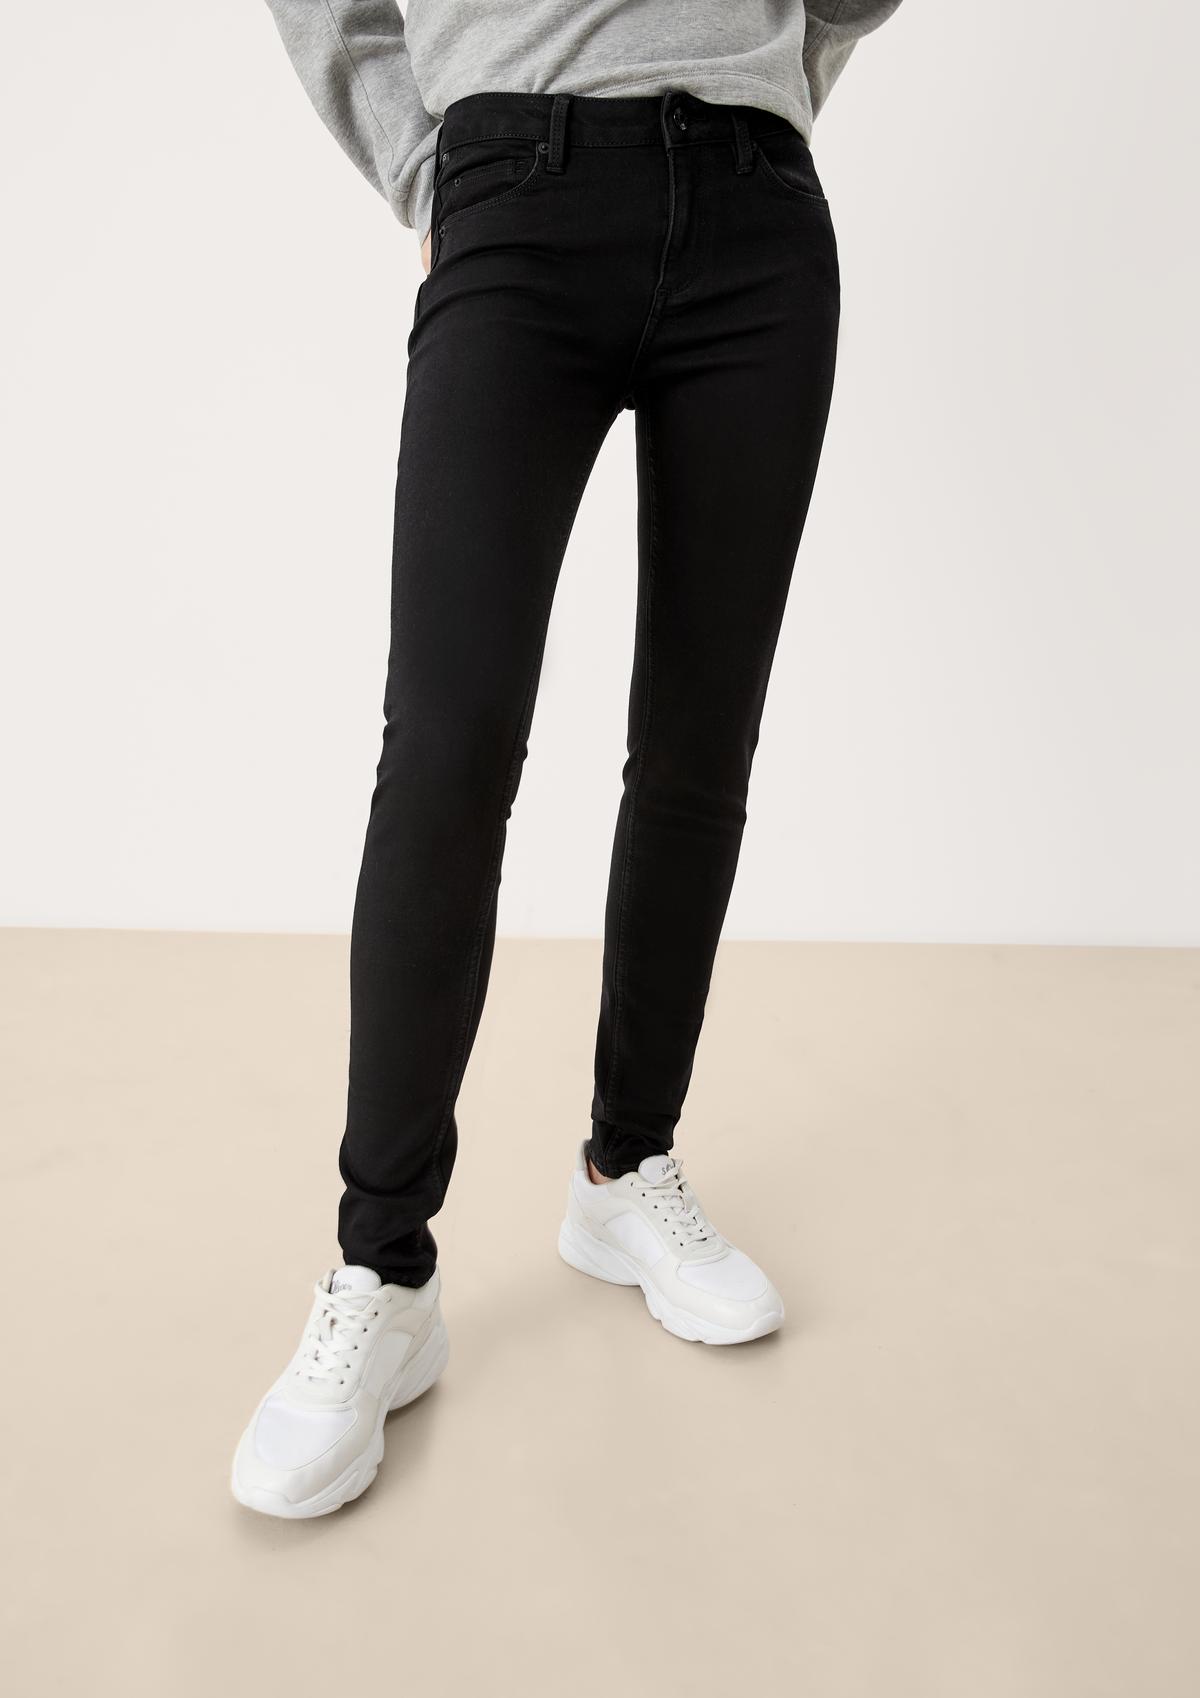 s.Oliver Jeans hlače Sadie / kroj Skinny Fit / Mid Rise / oprijete hlačnice